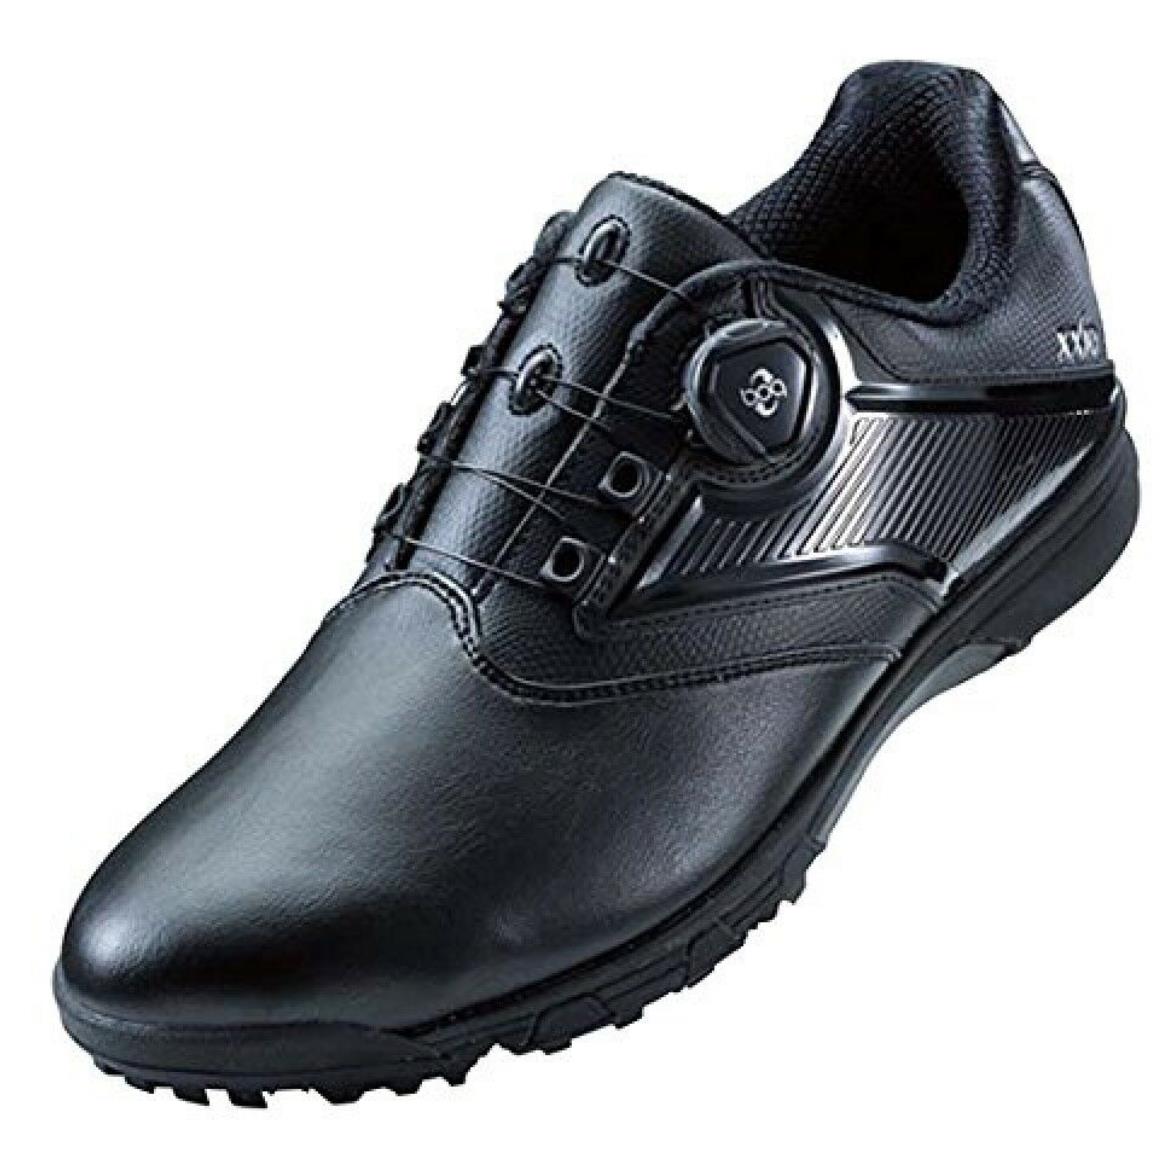 Asics Gel Tusk 2 Boa Spikeless Golf Shoes Black Mens Boys Youth Sz 6.5Y